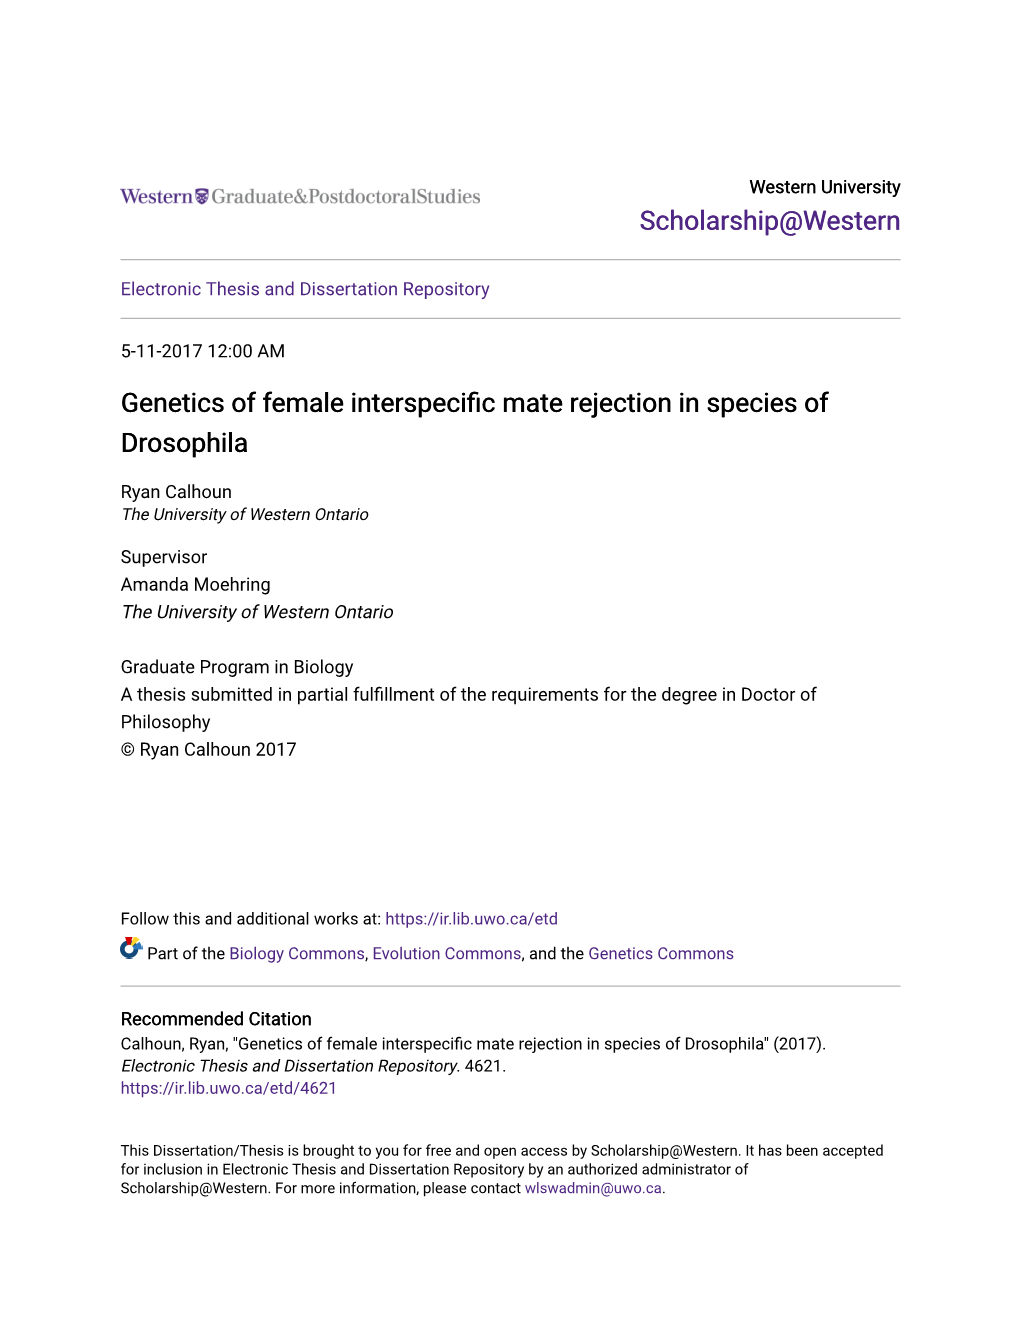 Genetics of Female Interspecific Mate Rejection in Species of Drosophila